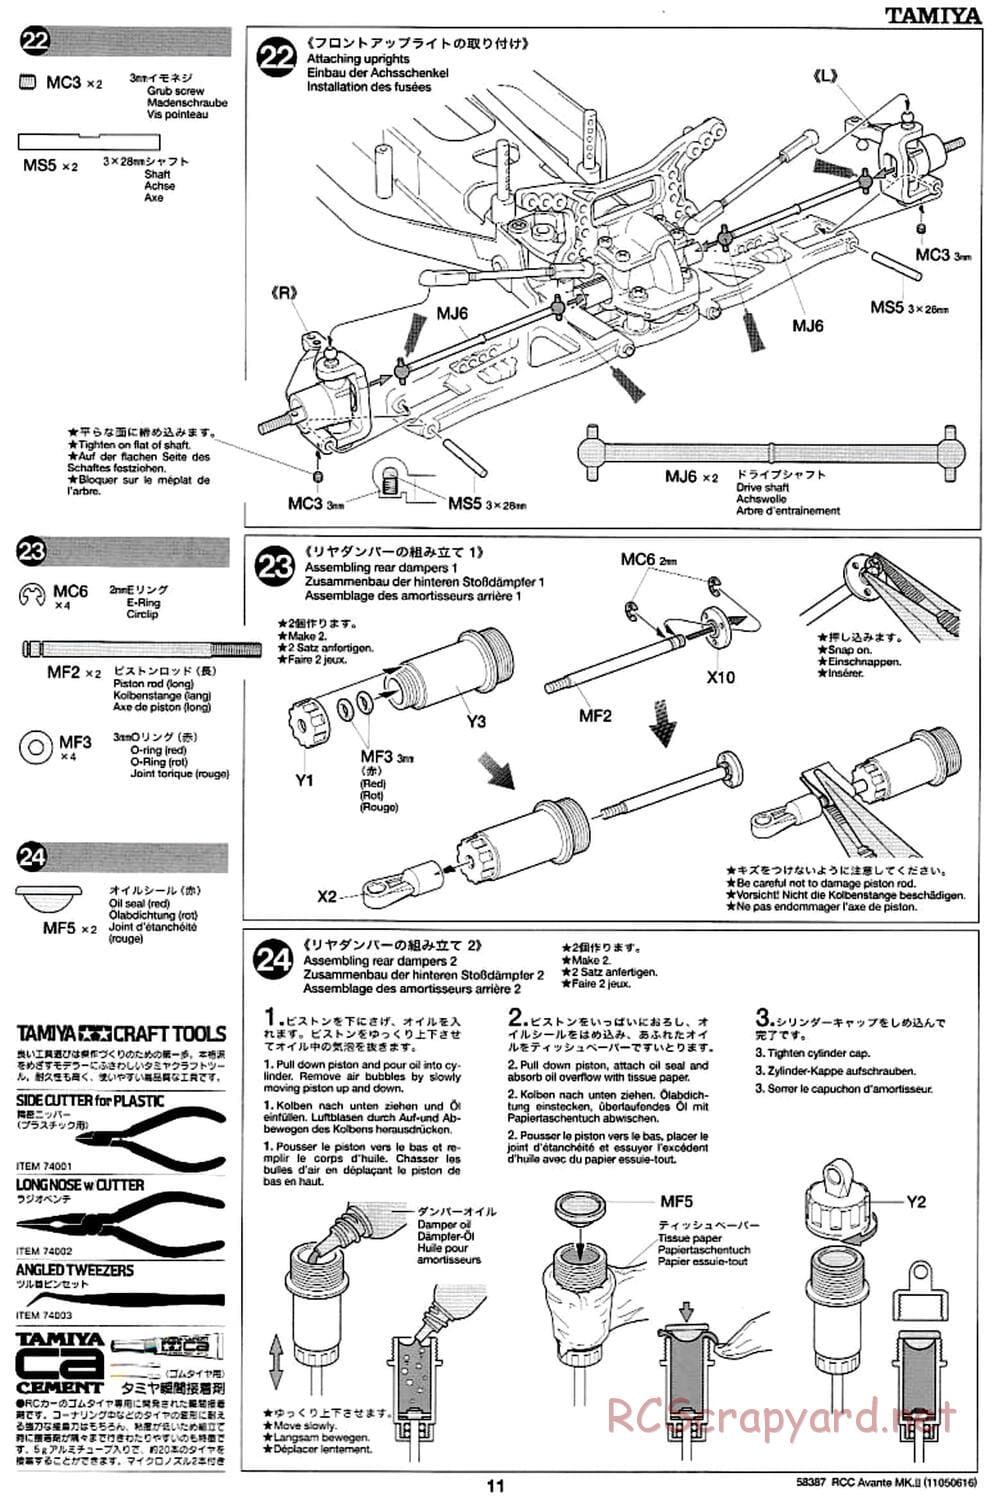 Tamiya - Avante Mk.II Chassis - Manual - Page 11